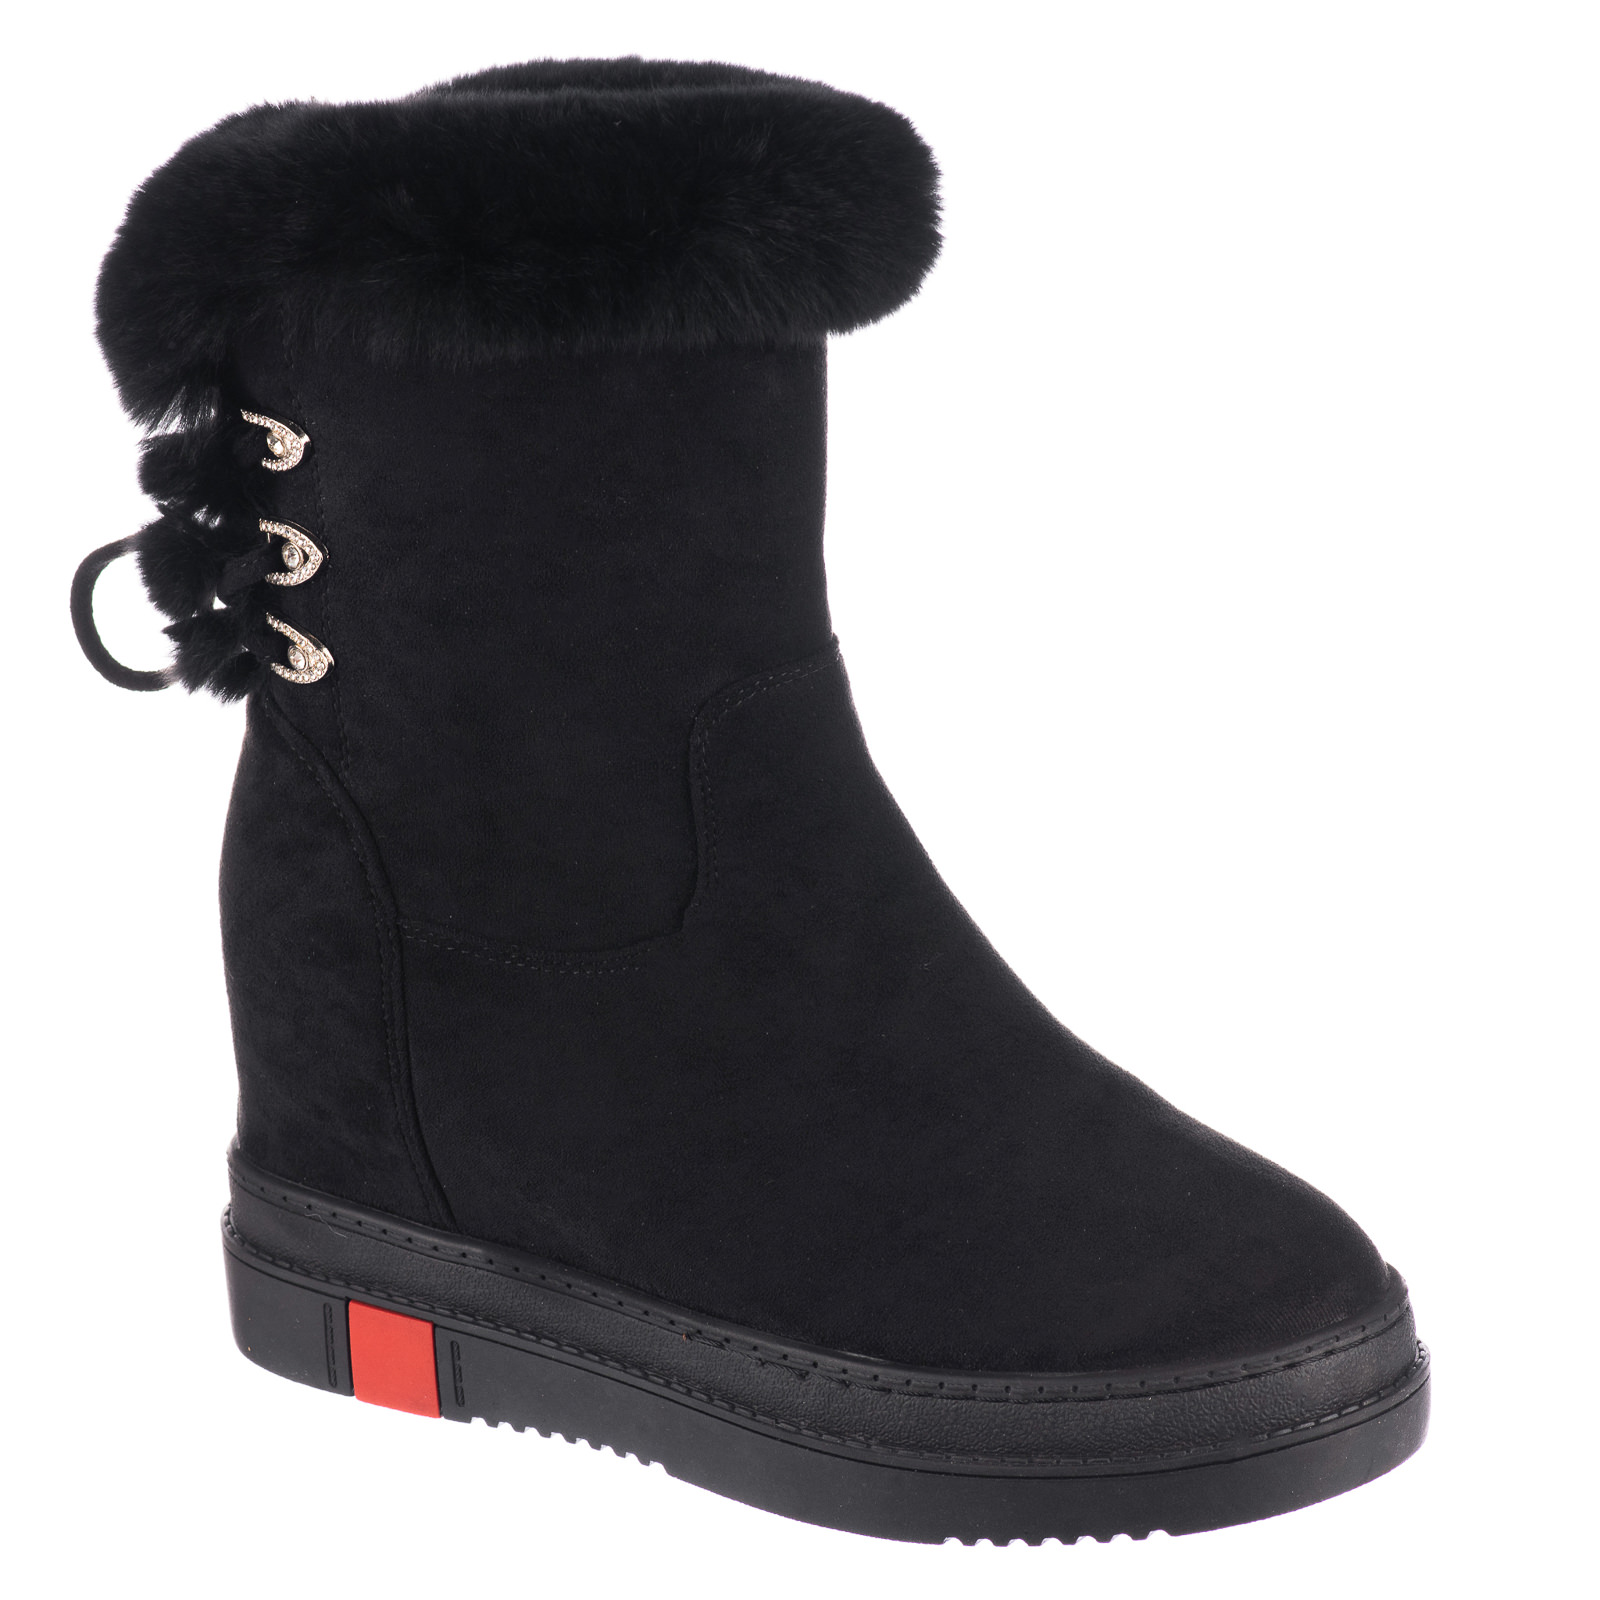 Women ankle boots B683 - BLACK